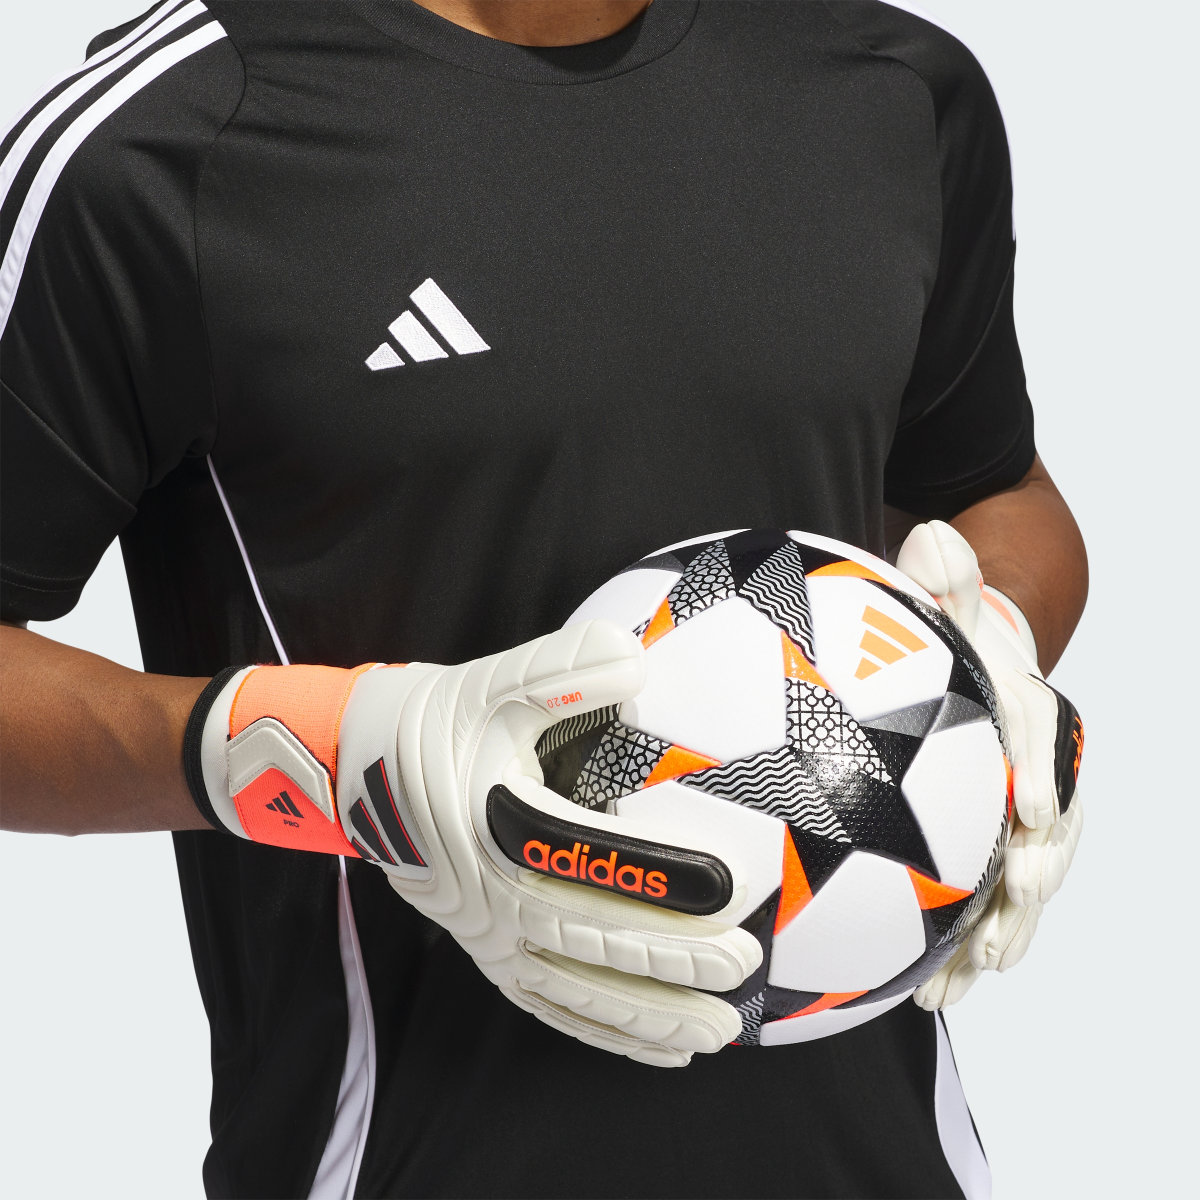 Adidas Copa Pro Goalkeeper Gloves. 6